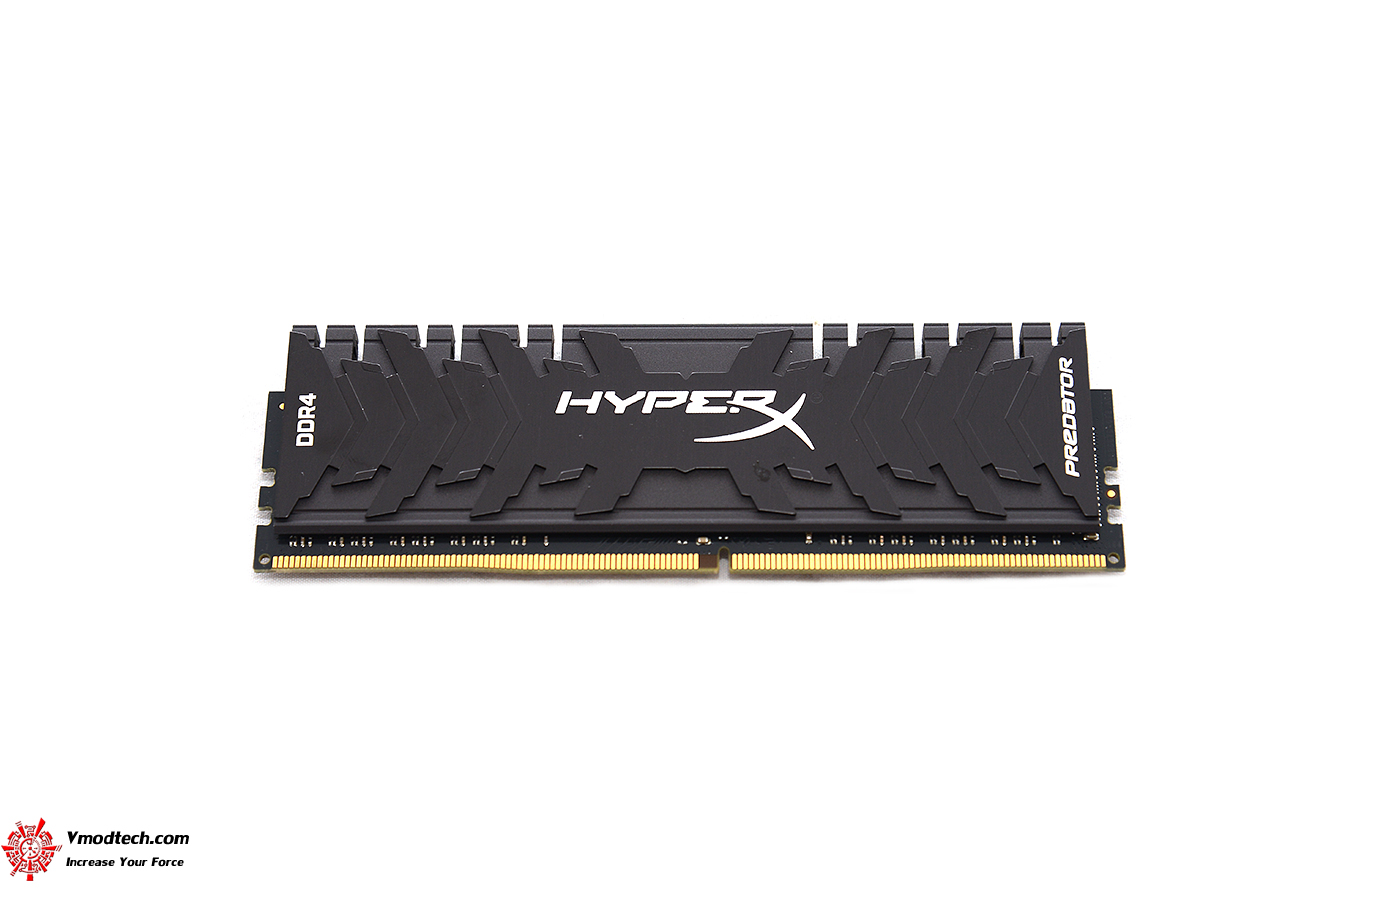 dsc 4977 HYPERX PREDATOR DDR4 3333MHz 16GB (2x8GB) CL16 REVIEW